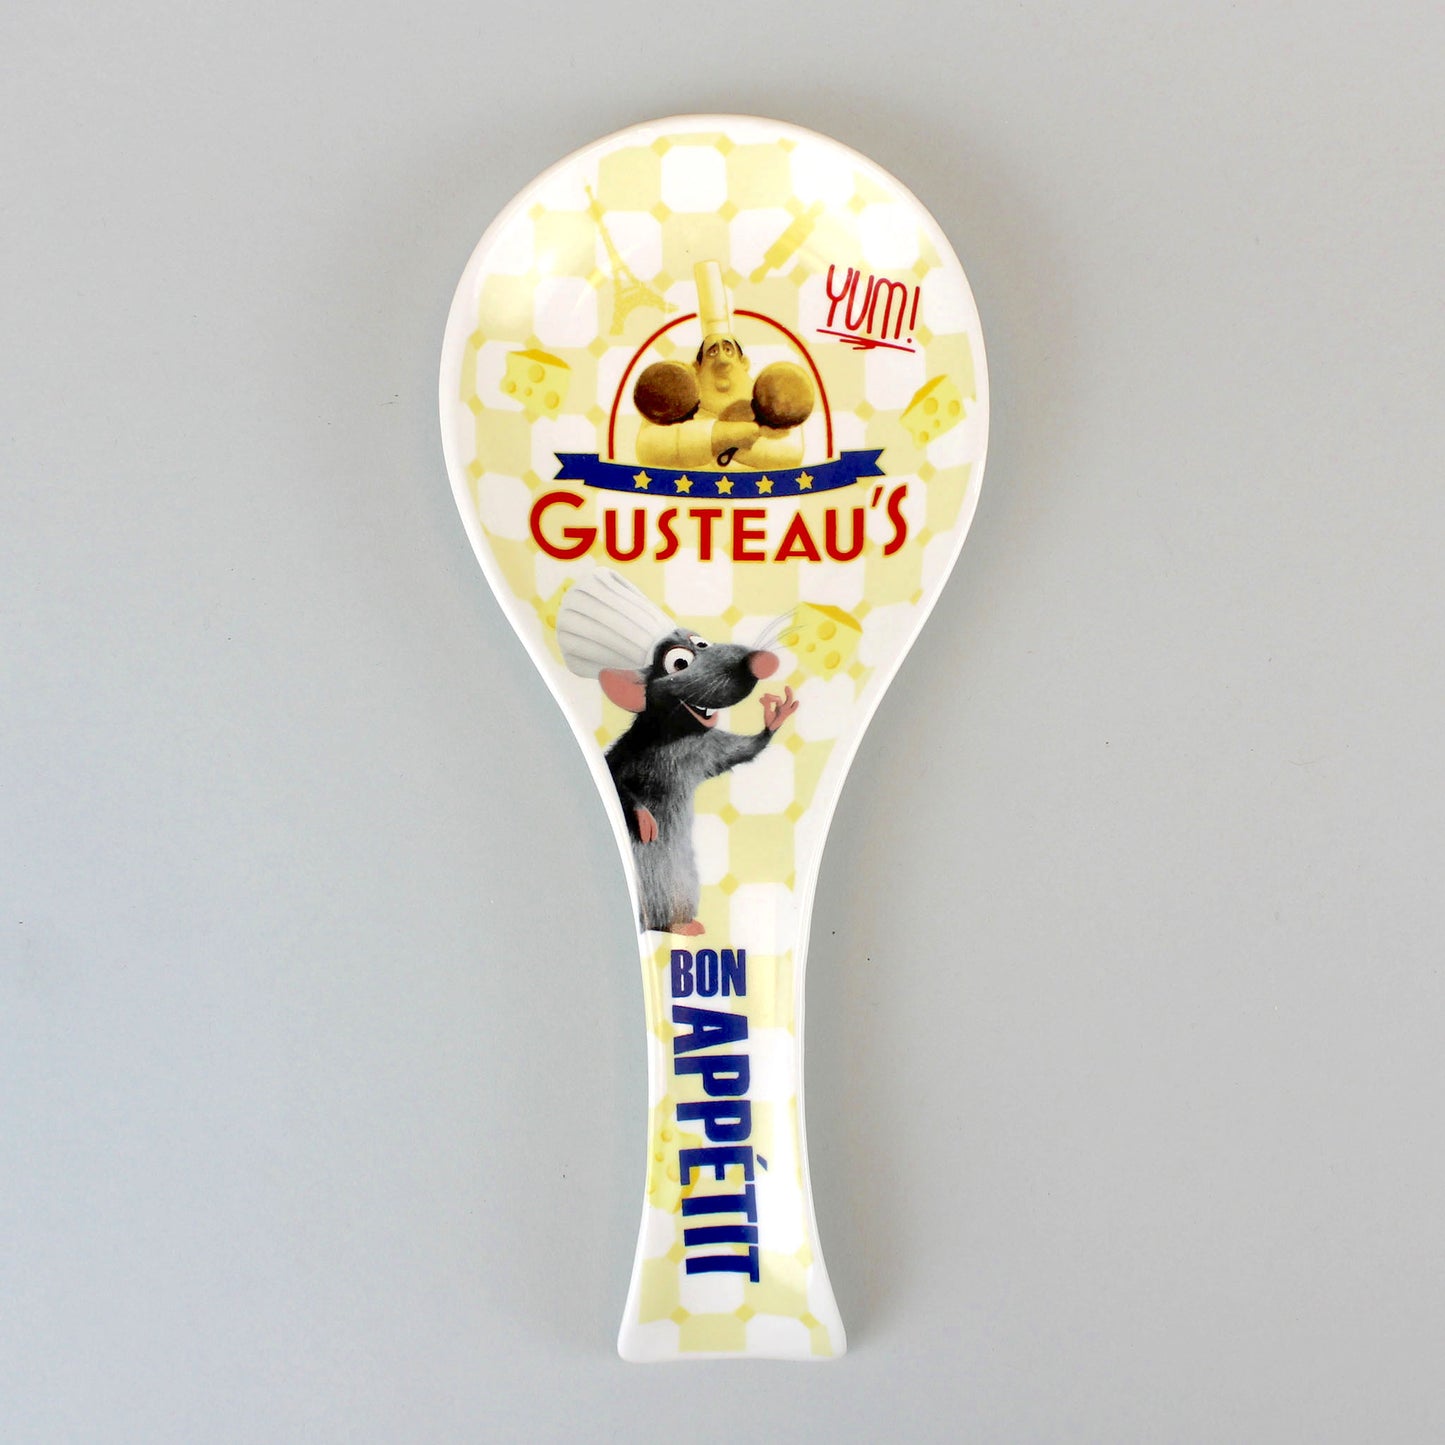 Gusteau's (Ratatouille) Disney Ceramic Spoon Rest